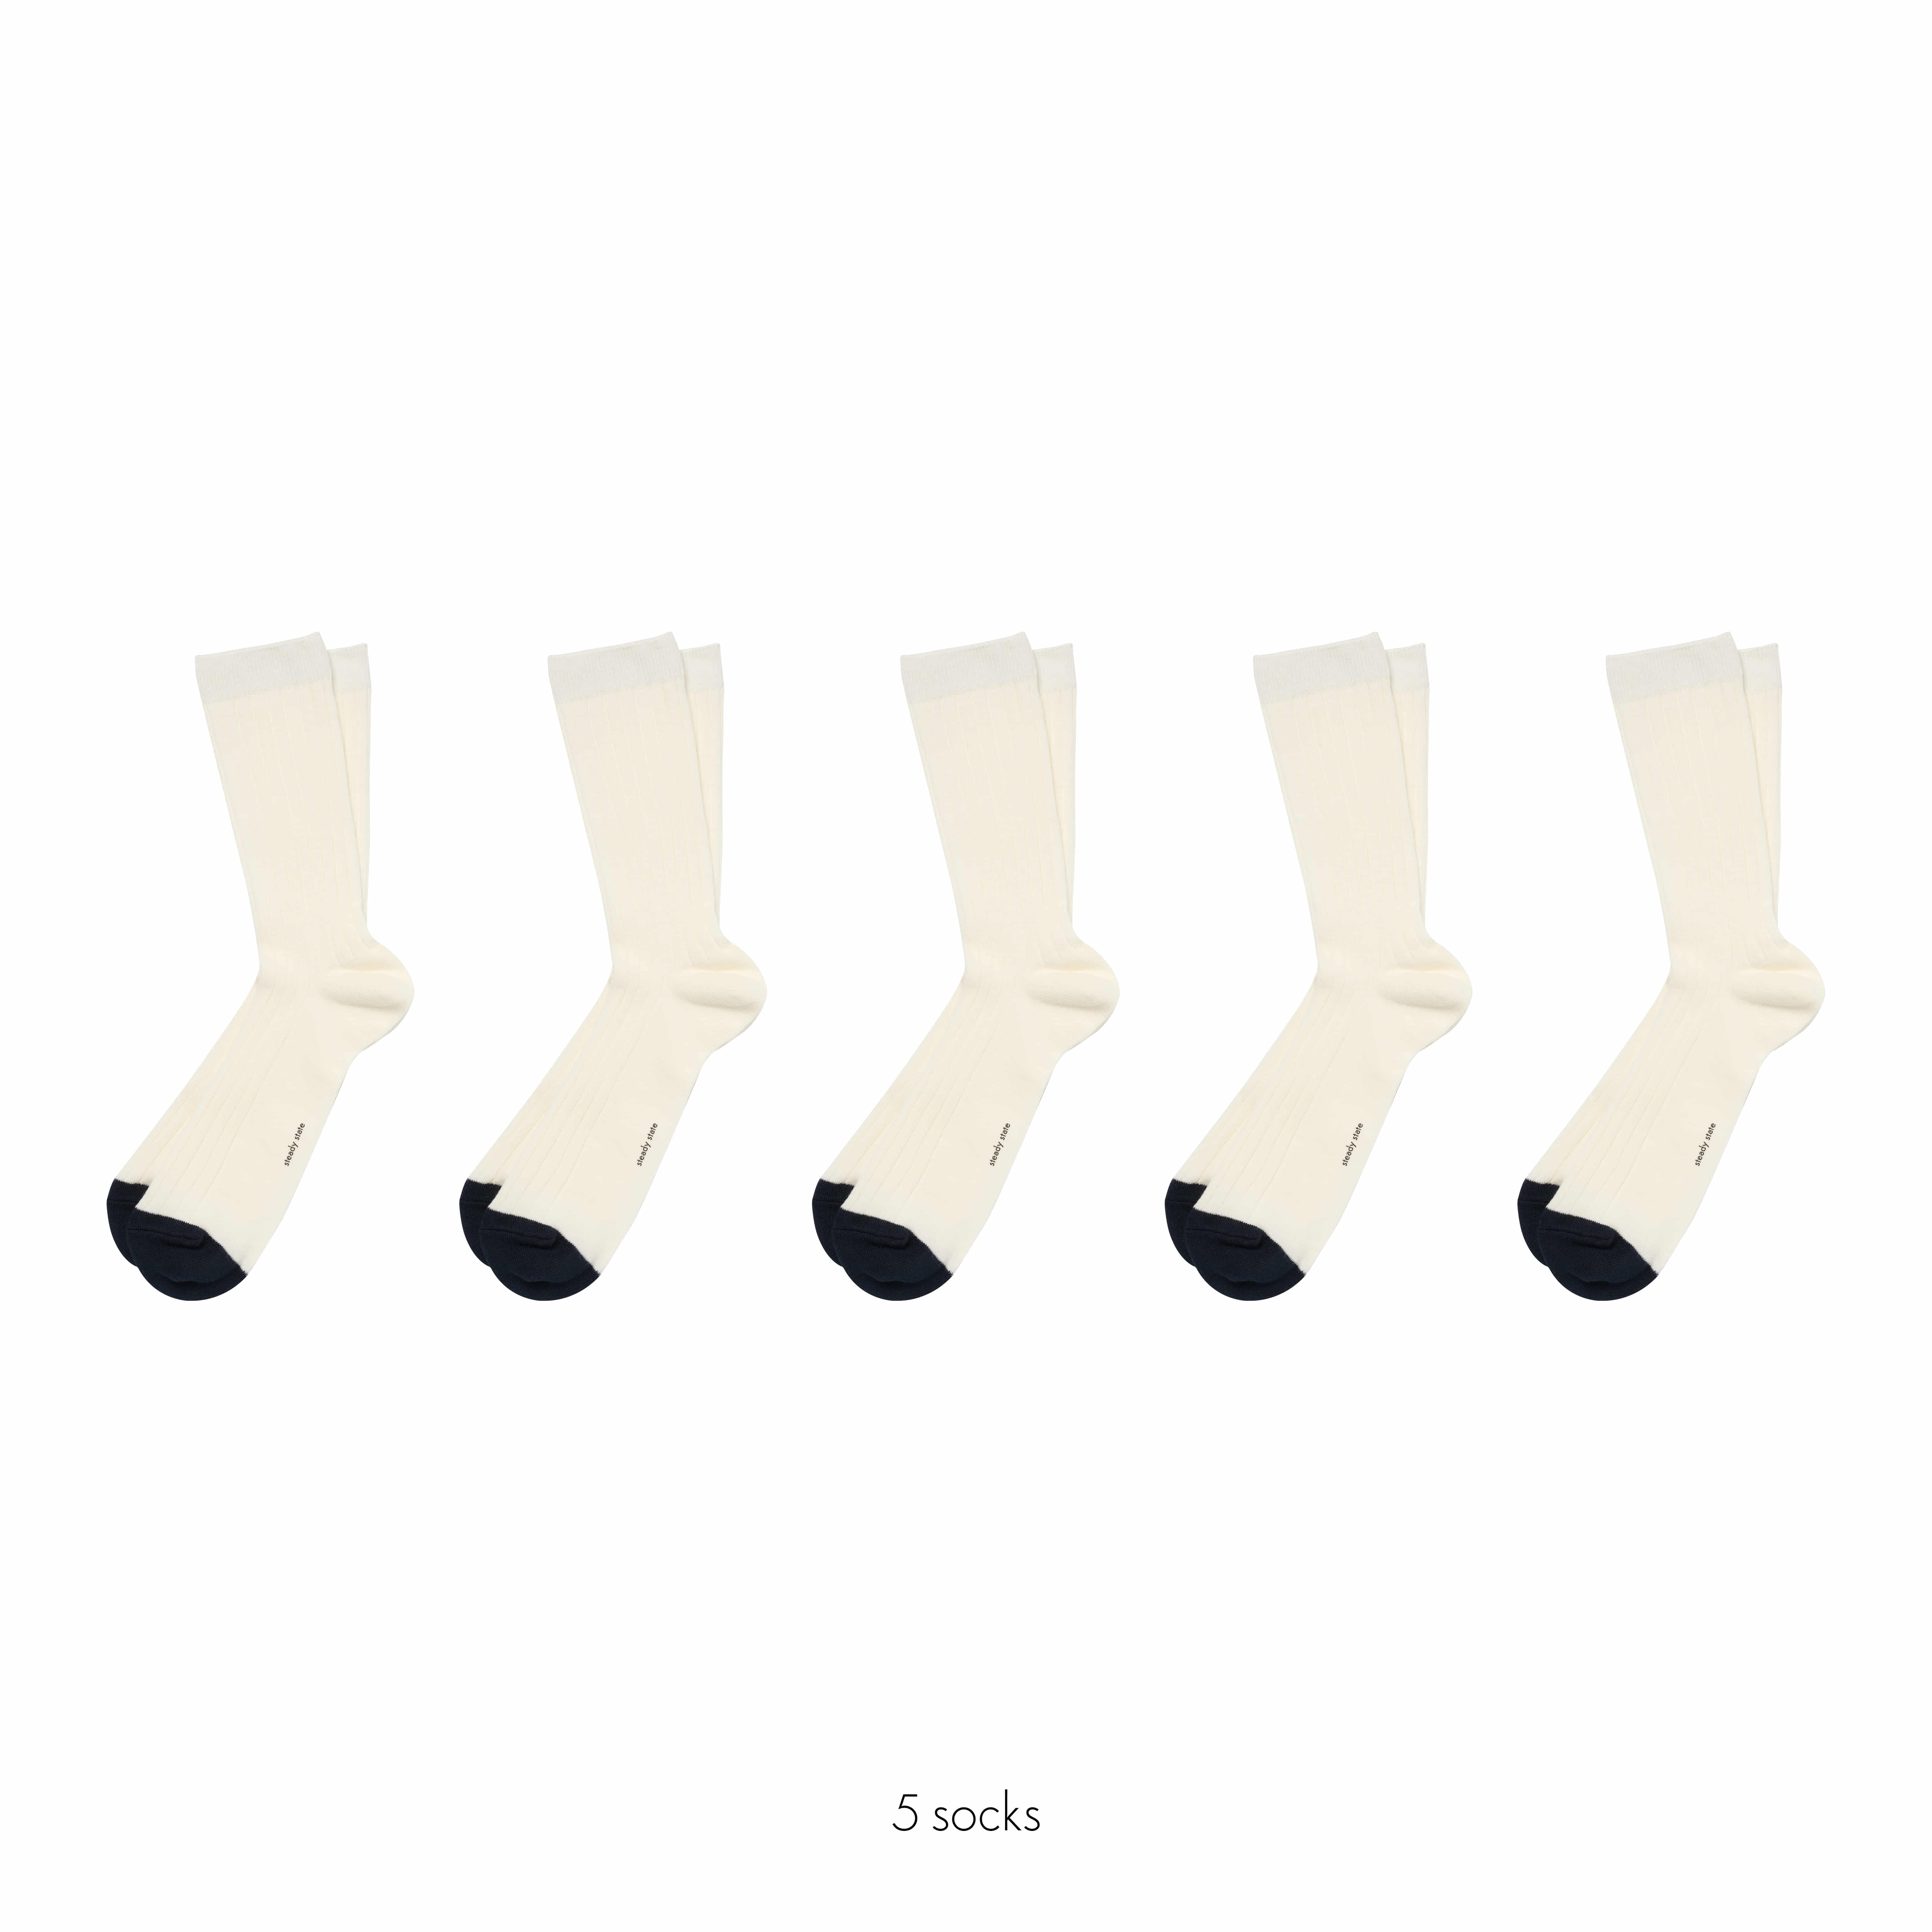 5 Socks Cotton navy dot creamy